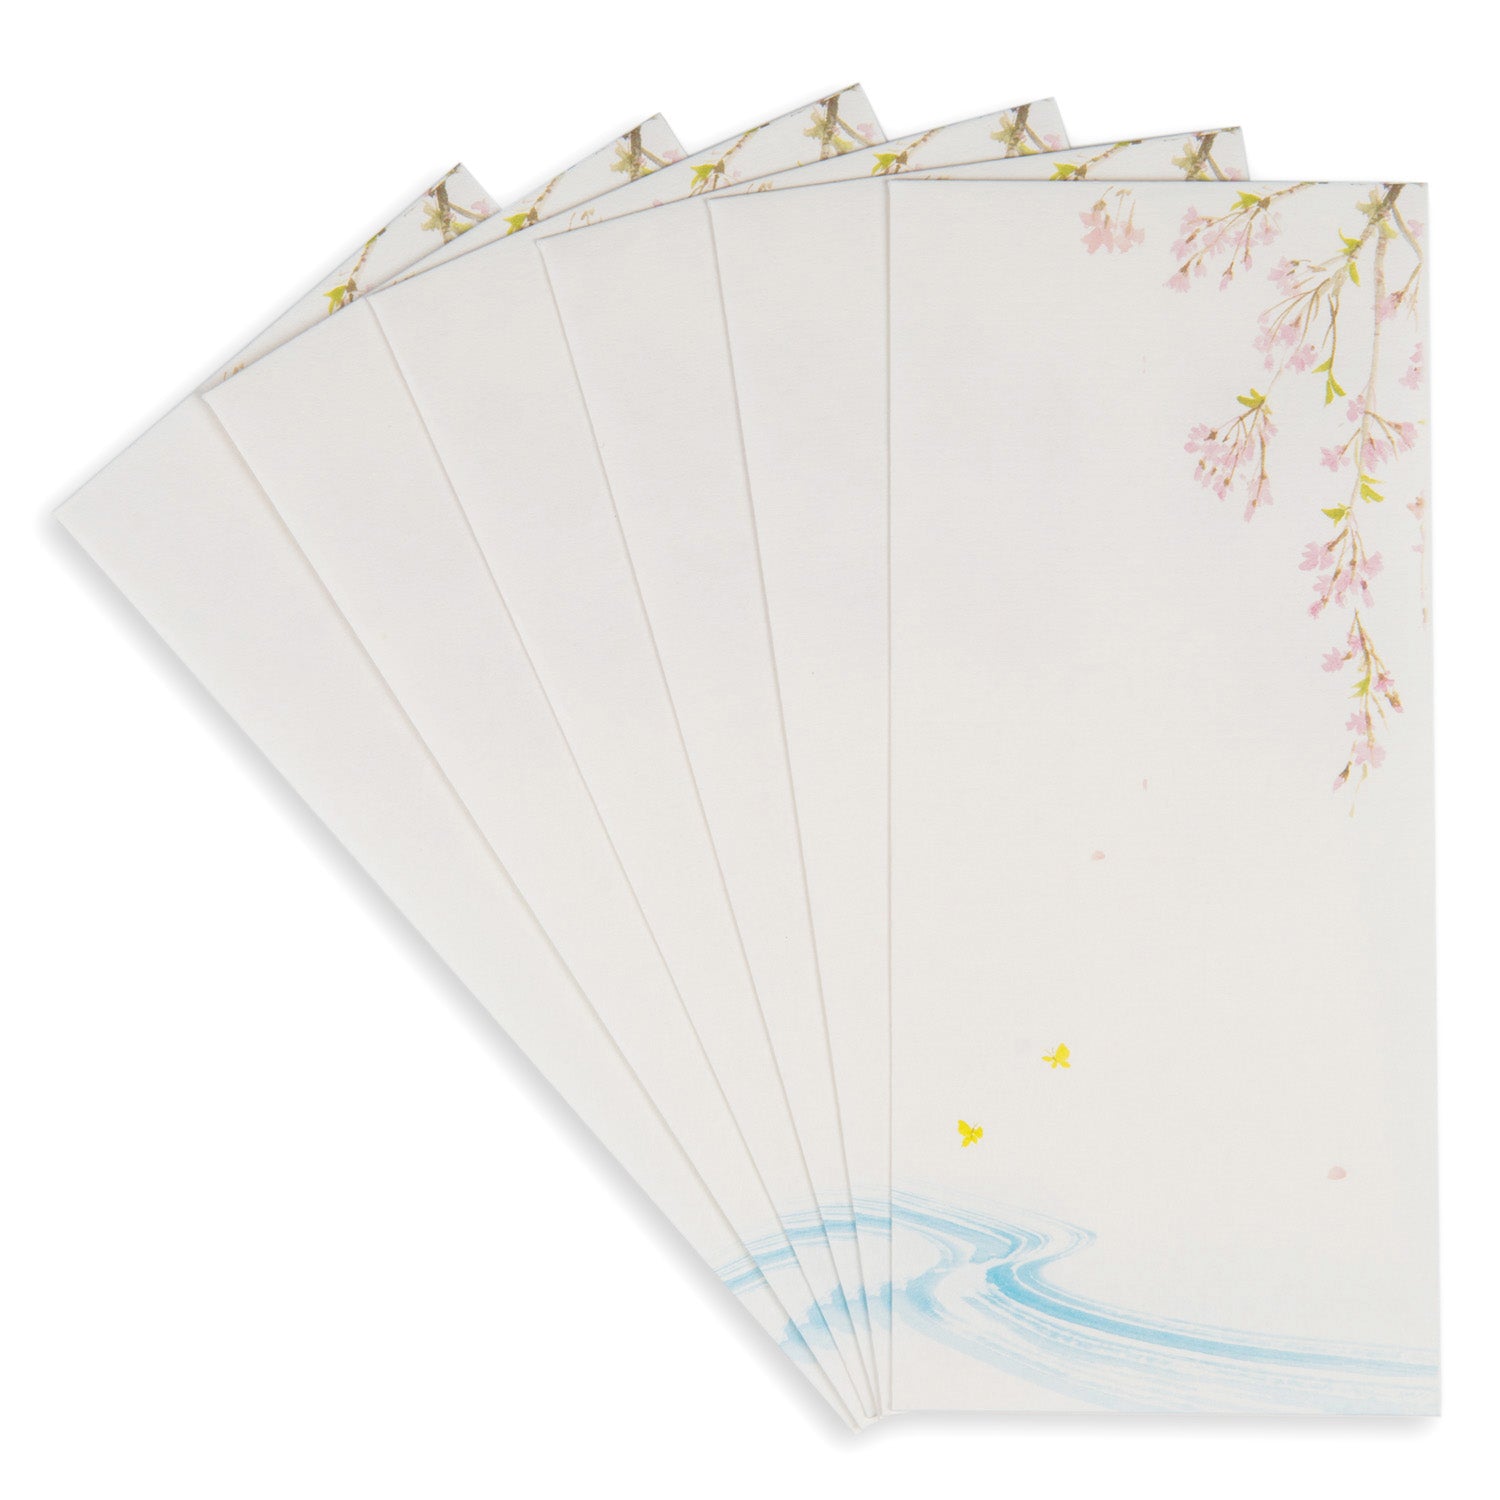 Blossom Traditional Japanese Writing Set